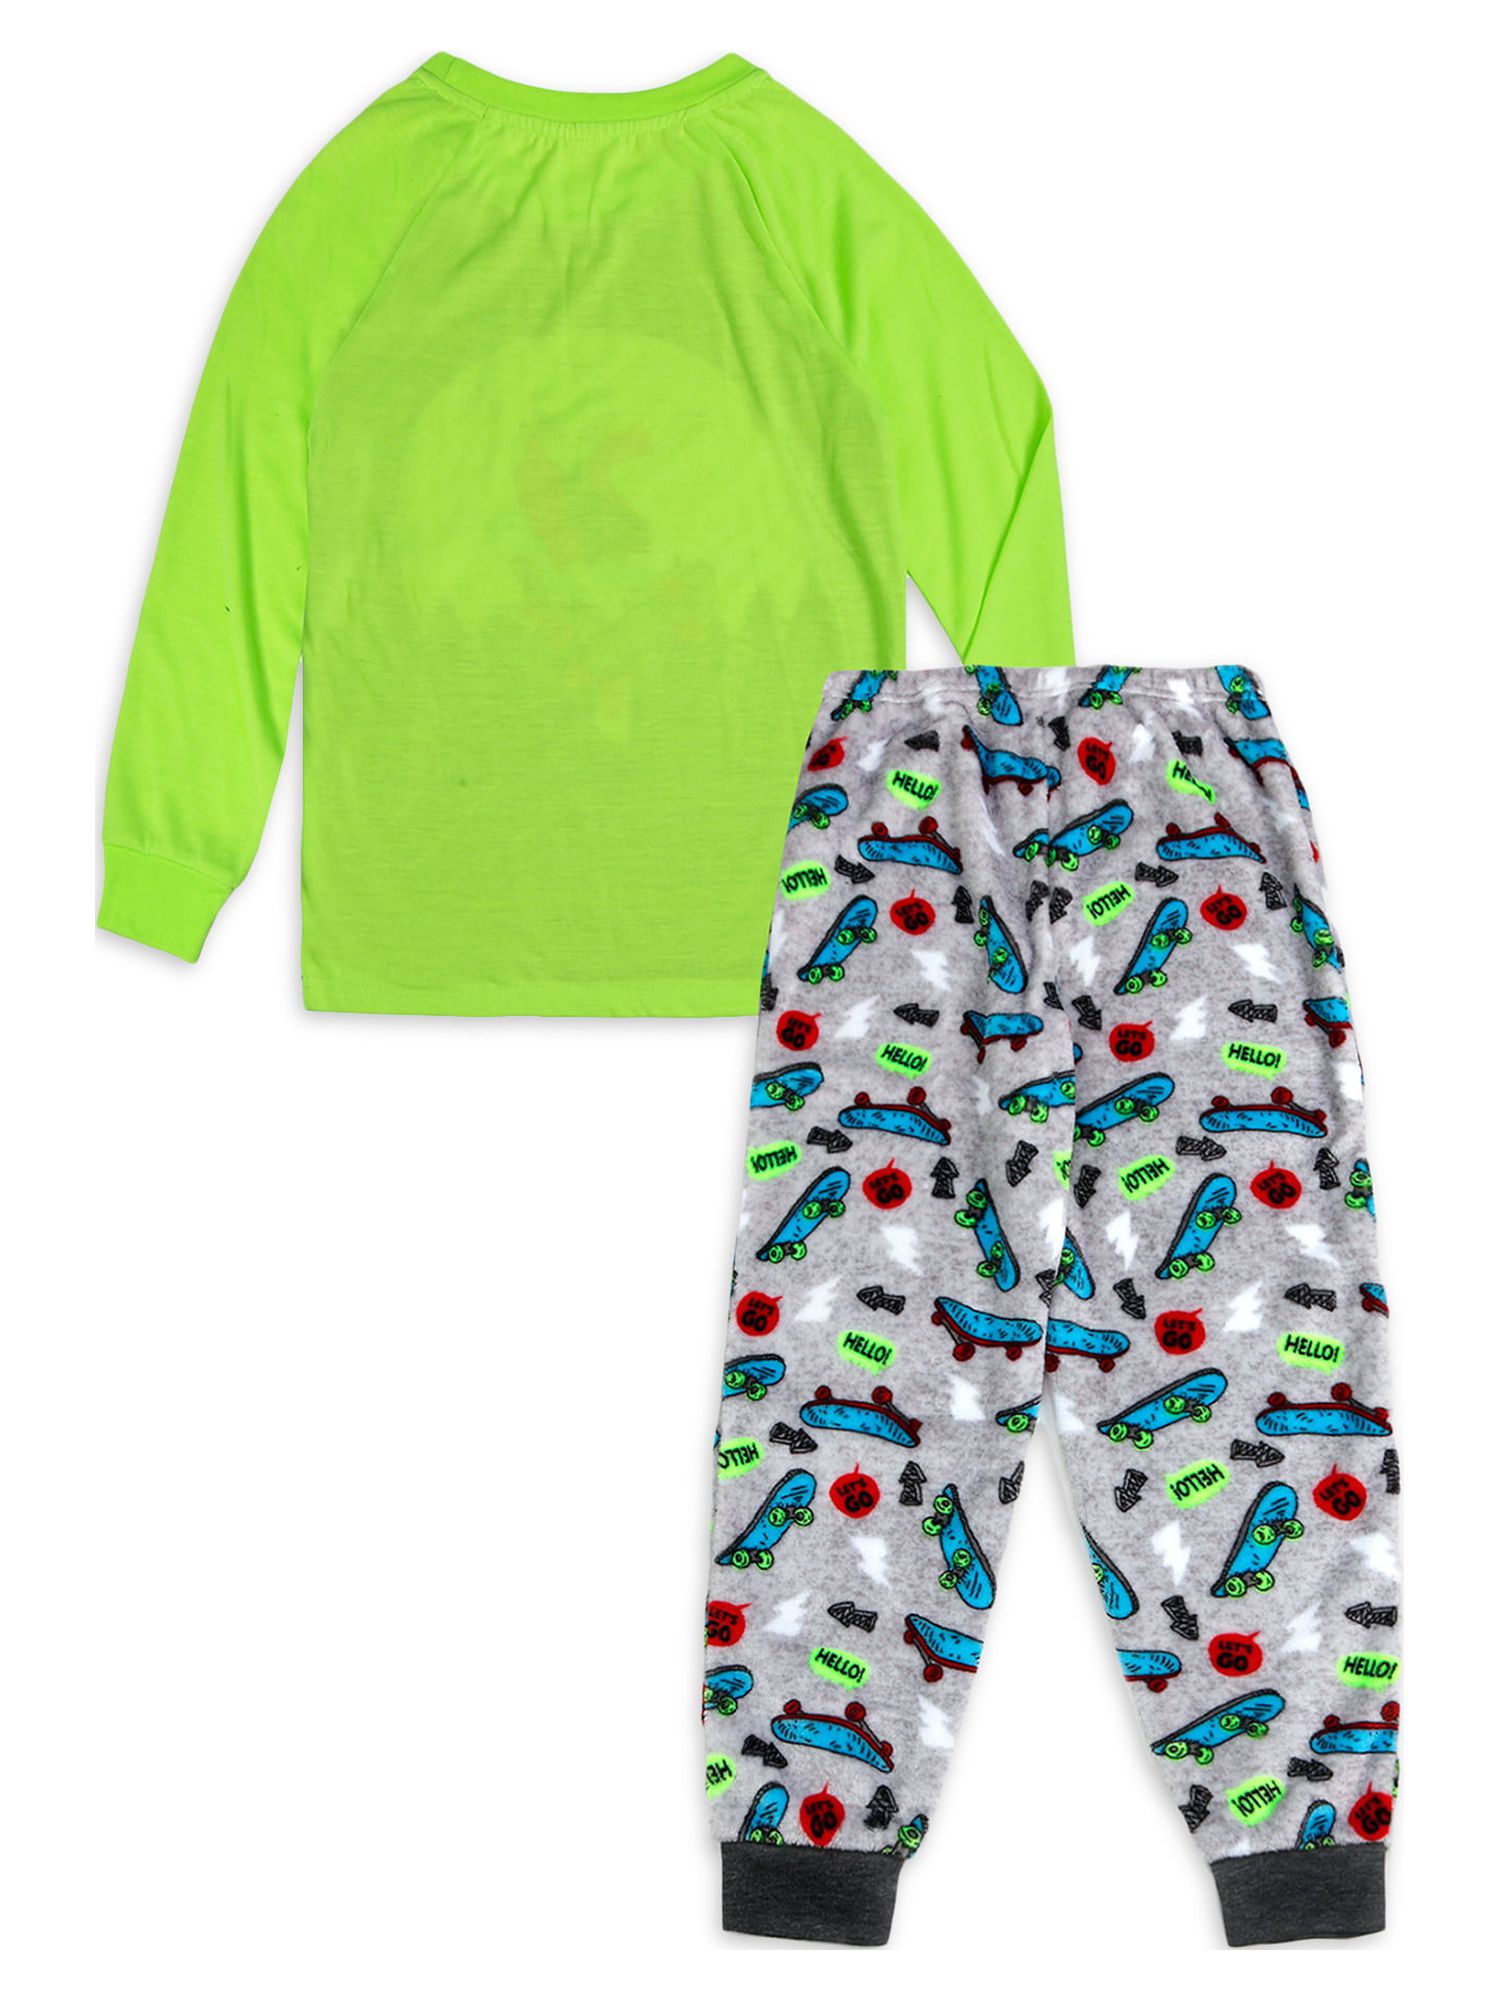 Wonder Nation Boys Long Sleeve Top and Pants Pajama Set, 2-Piece, Sizes 4-18 & Husky - image 2 of 3